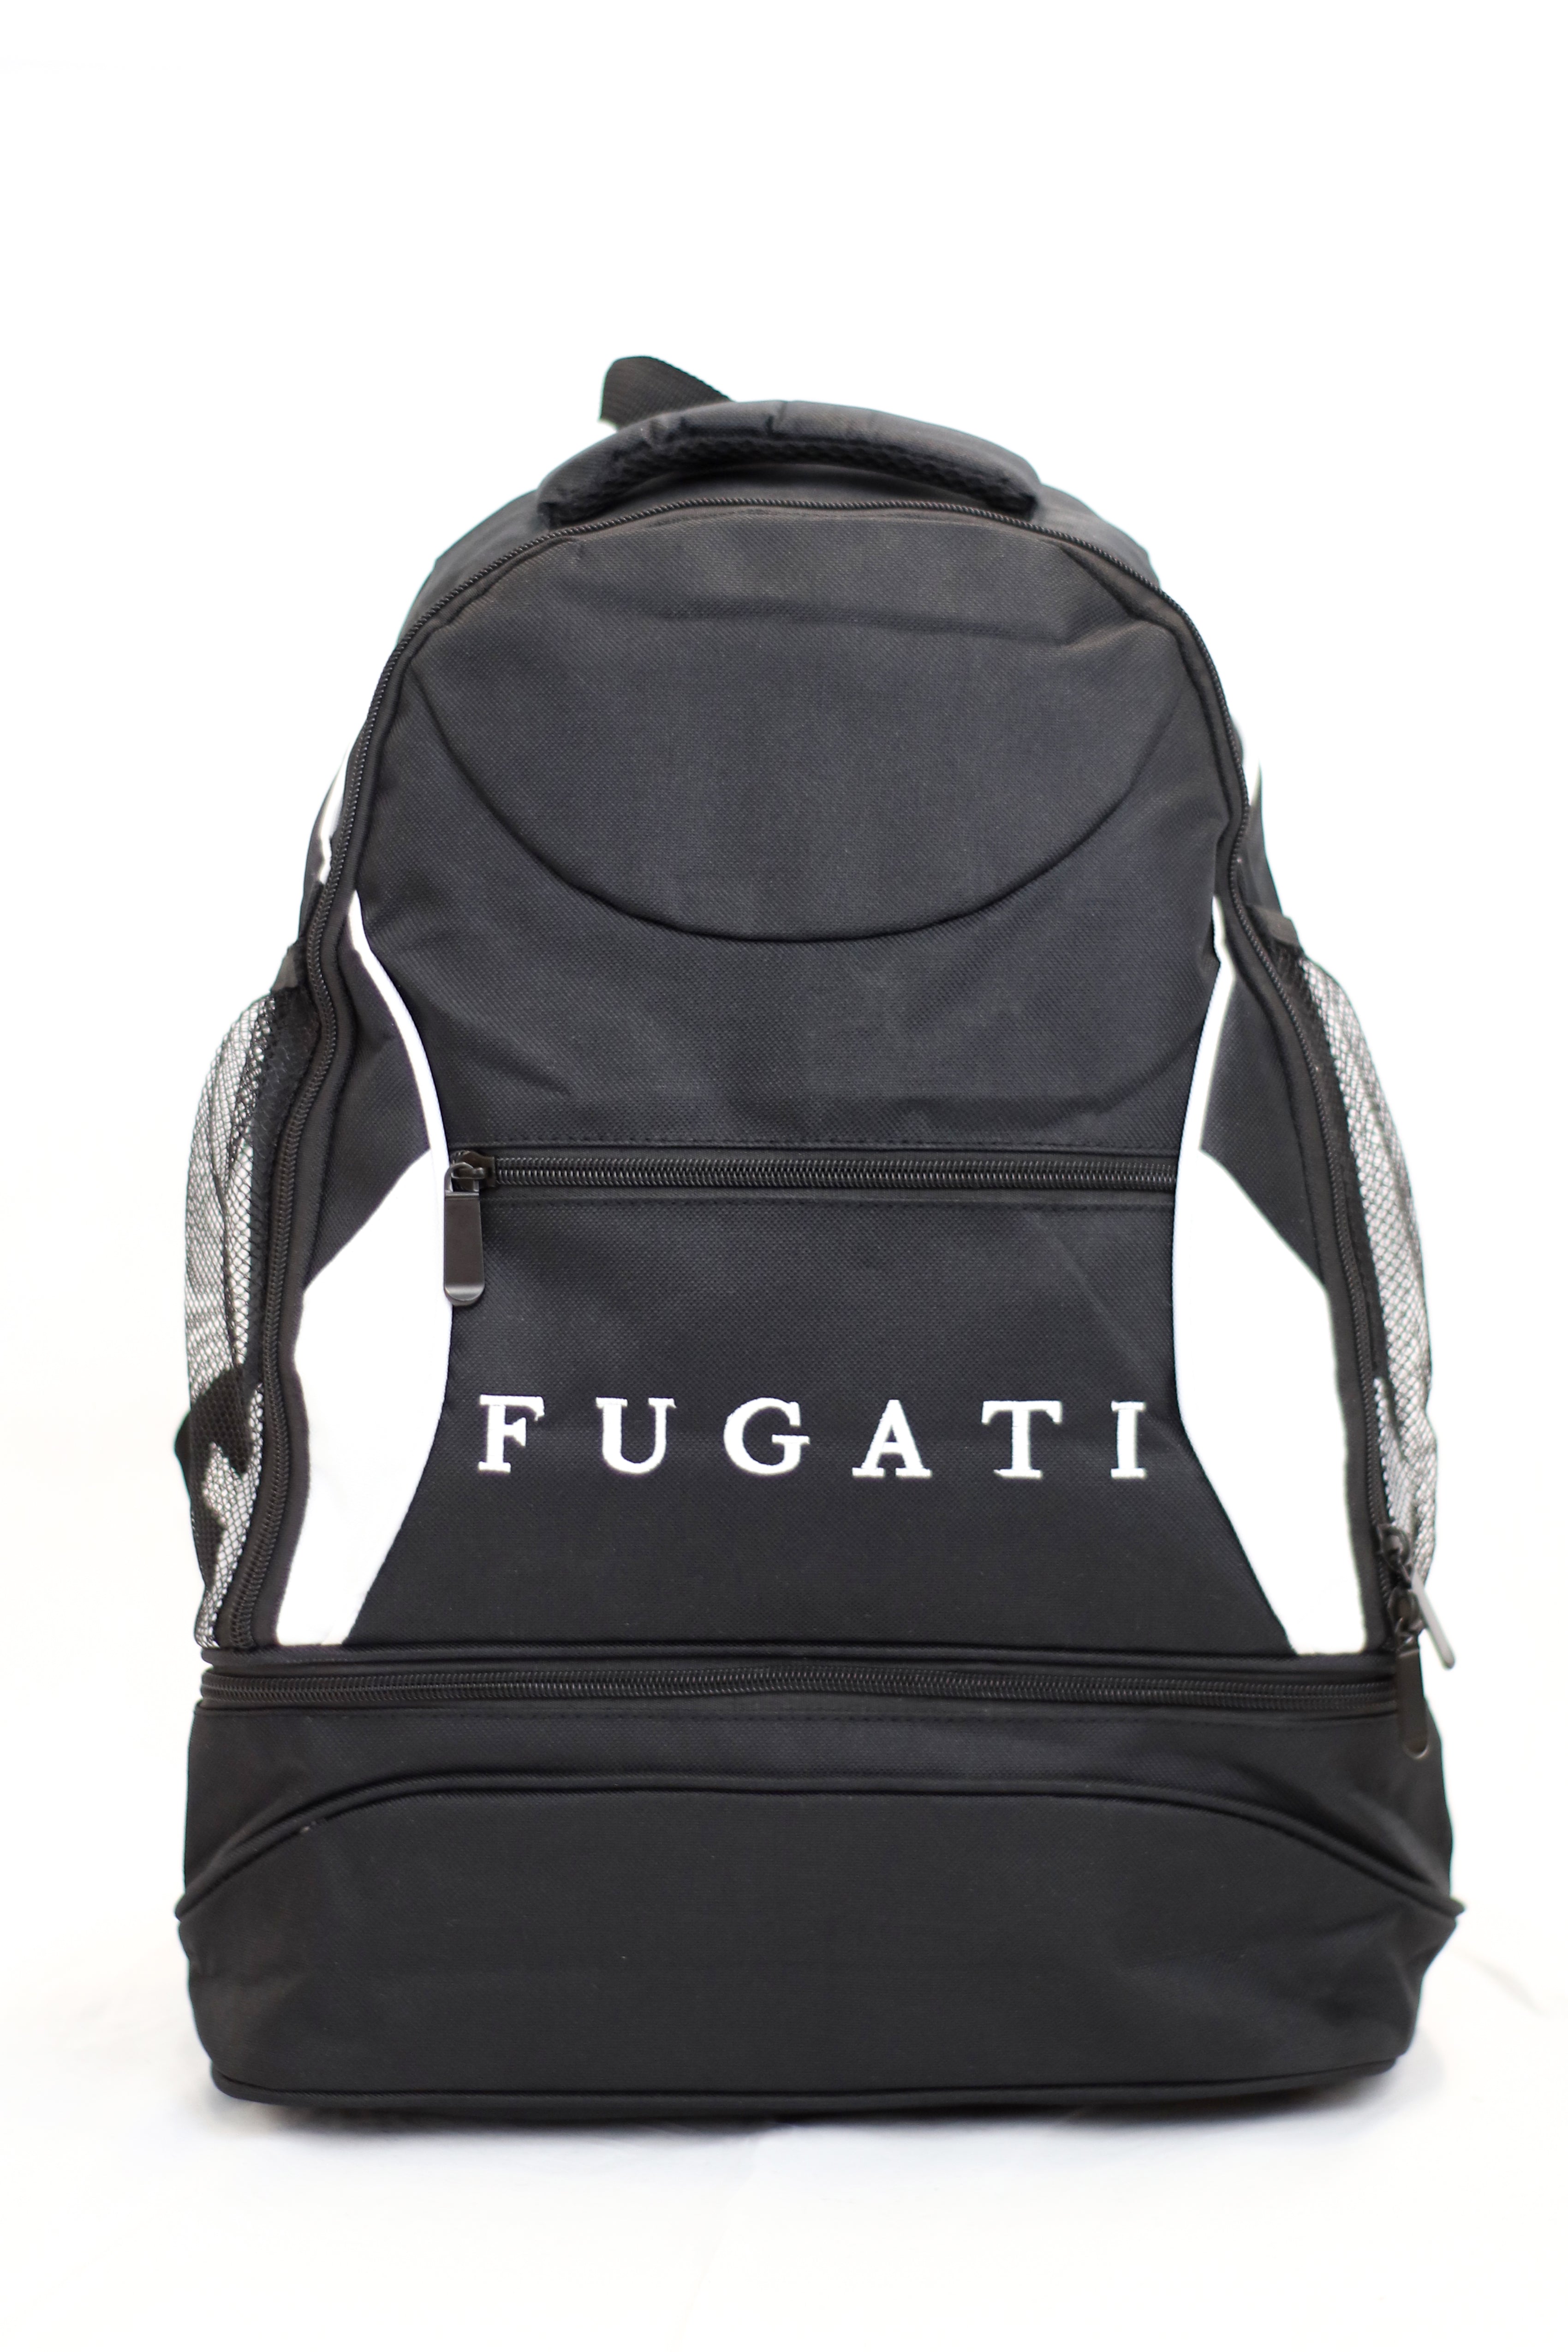 Fugati Pro Backpack